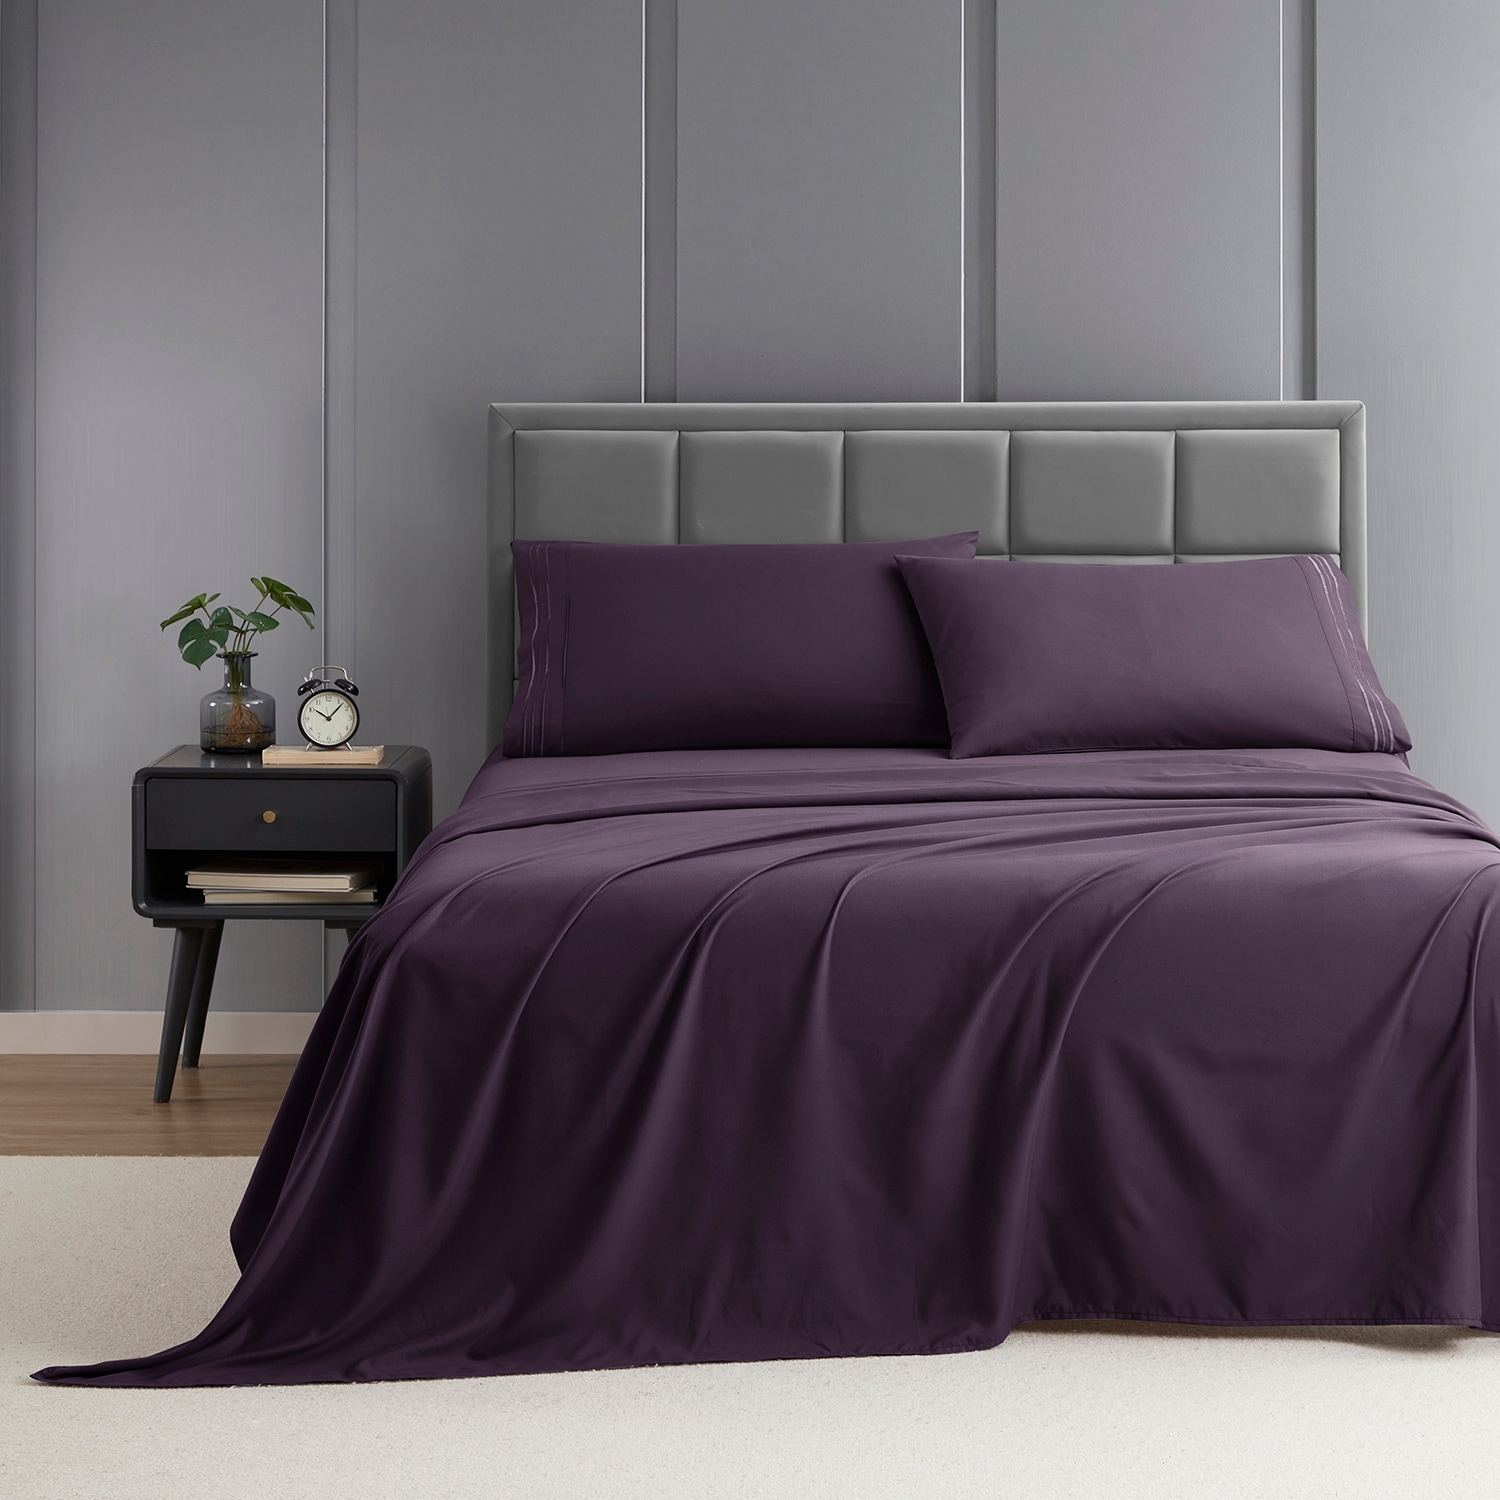  Clara Clark Premier 1800 Series 4pc Bed Sheet Set